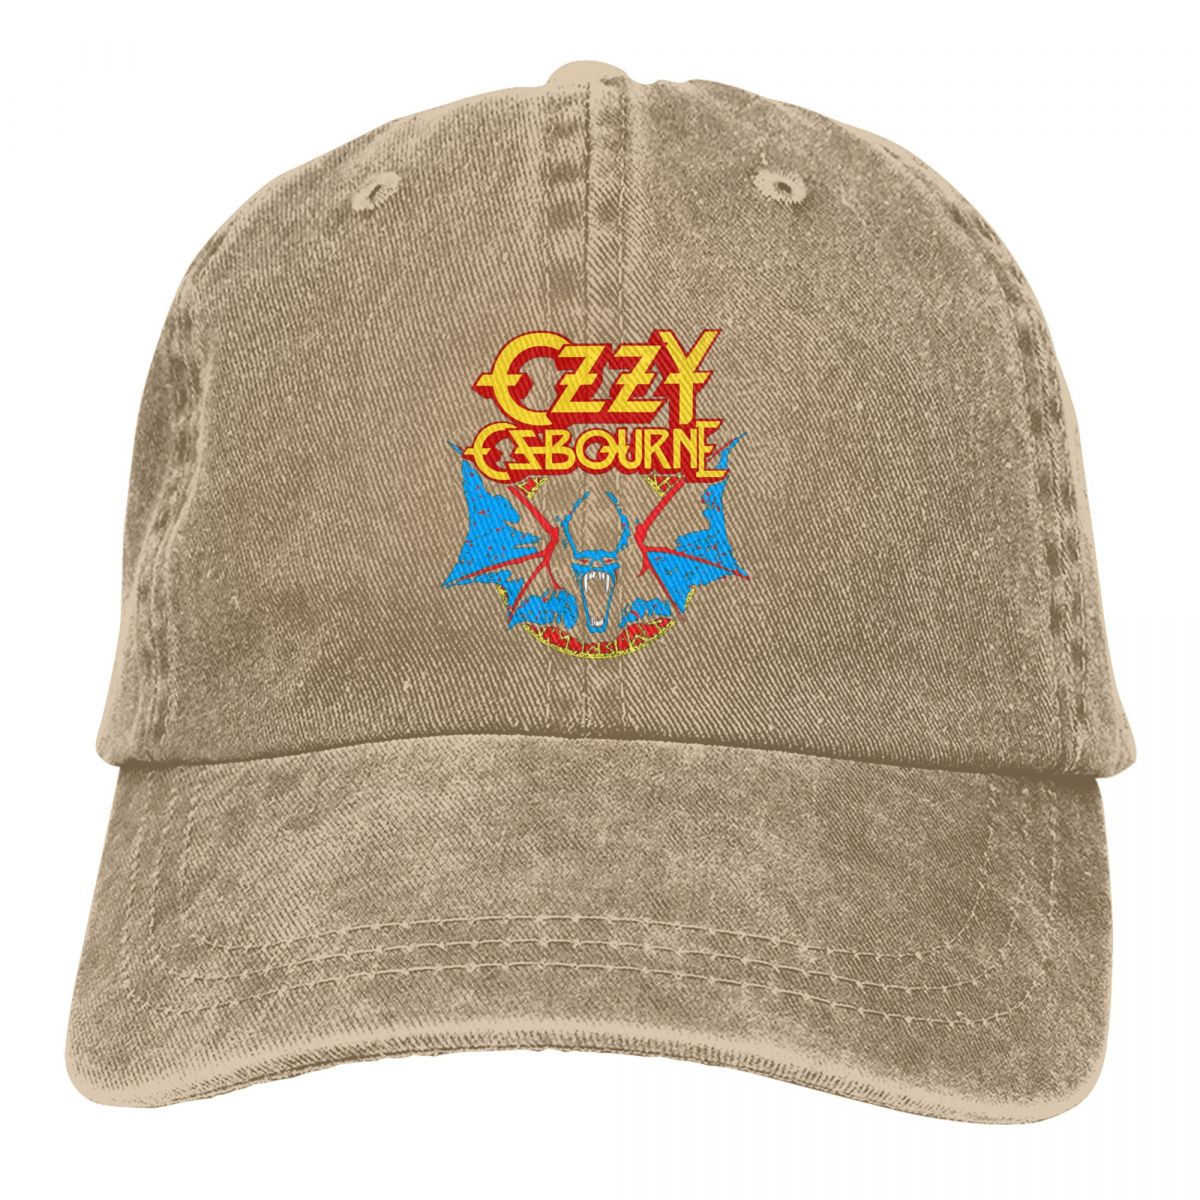 Ozzy Osbourne Rock Bat Prince Of Darkness - Snapback Baseball Cap - Summer Hat For Men and Women-Khaki-One Size-